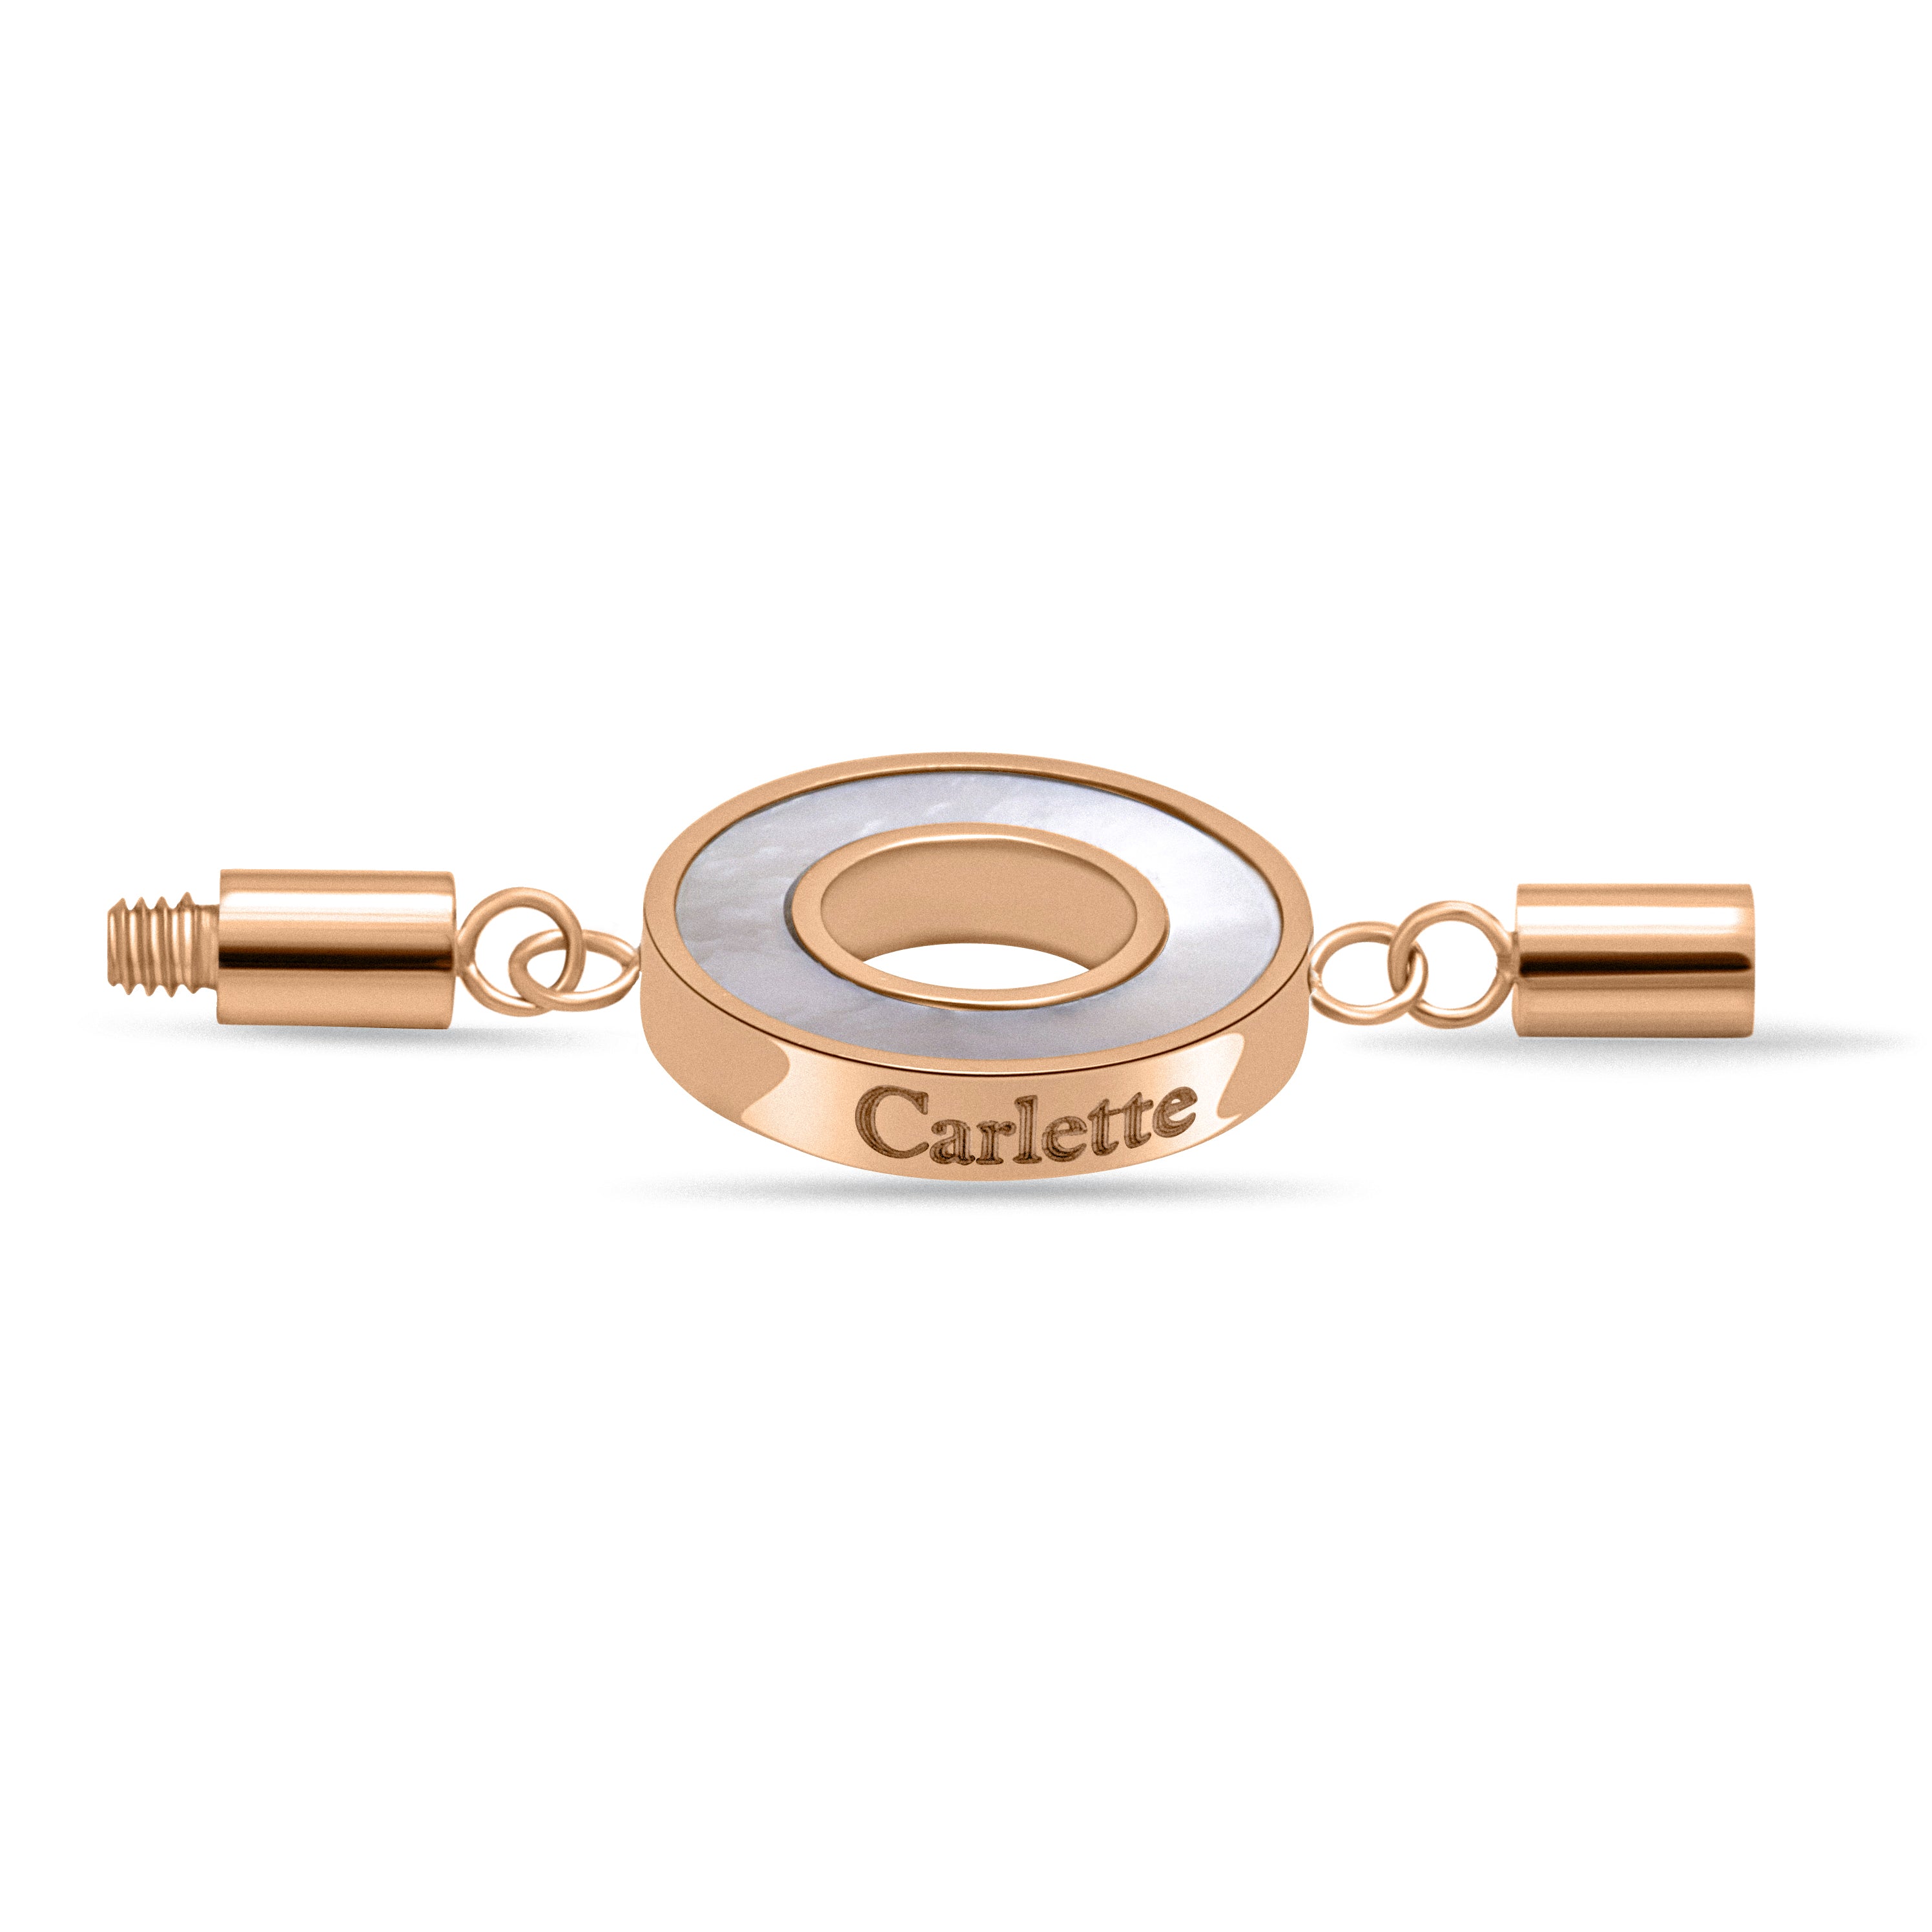 carlette charms – Carlette Jewellery